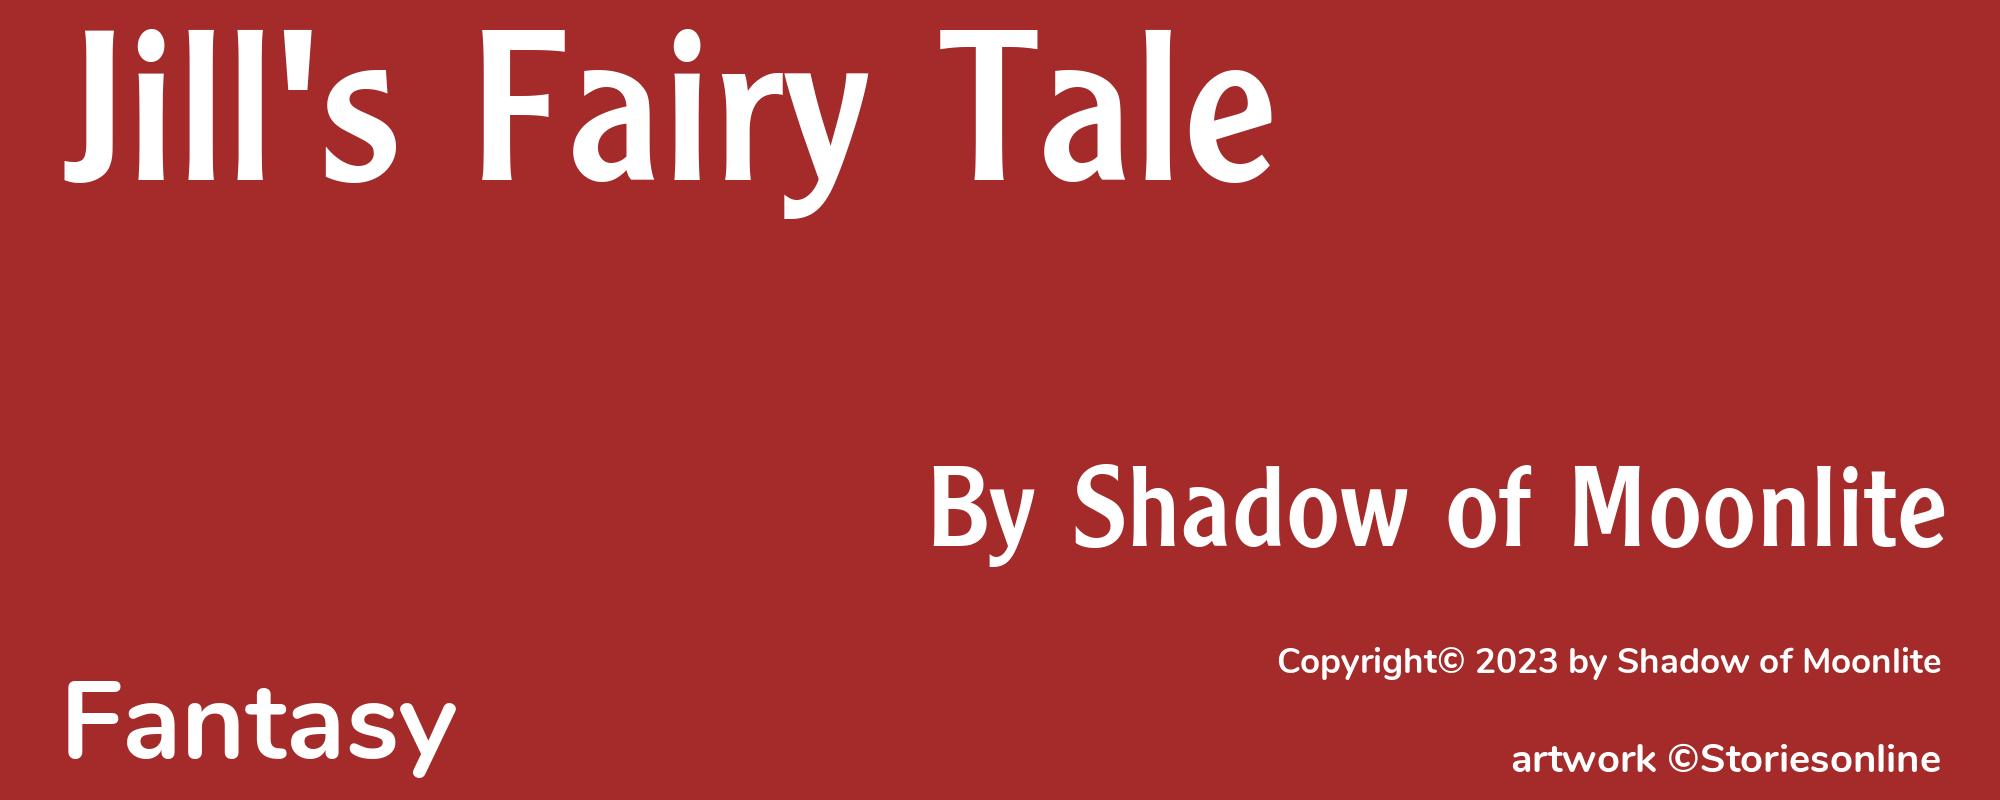 Jill's Fairy Tale - Cover